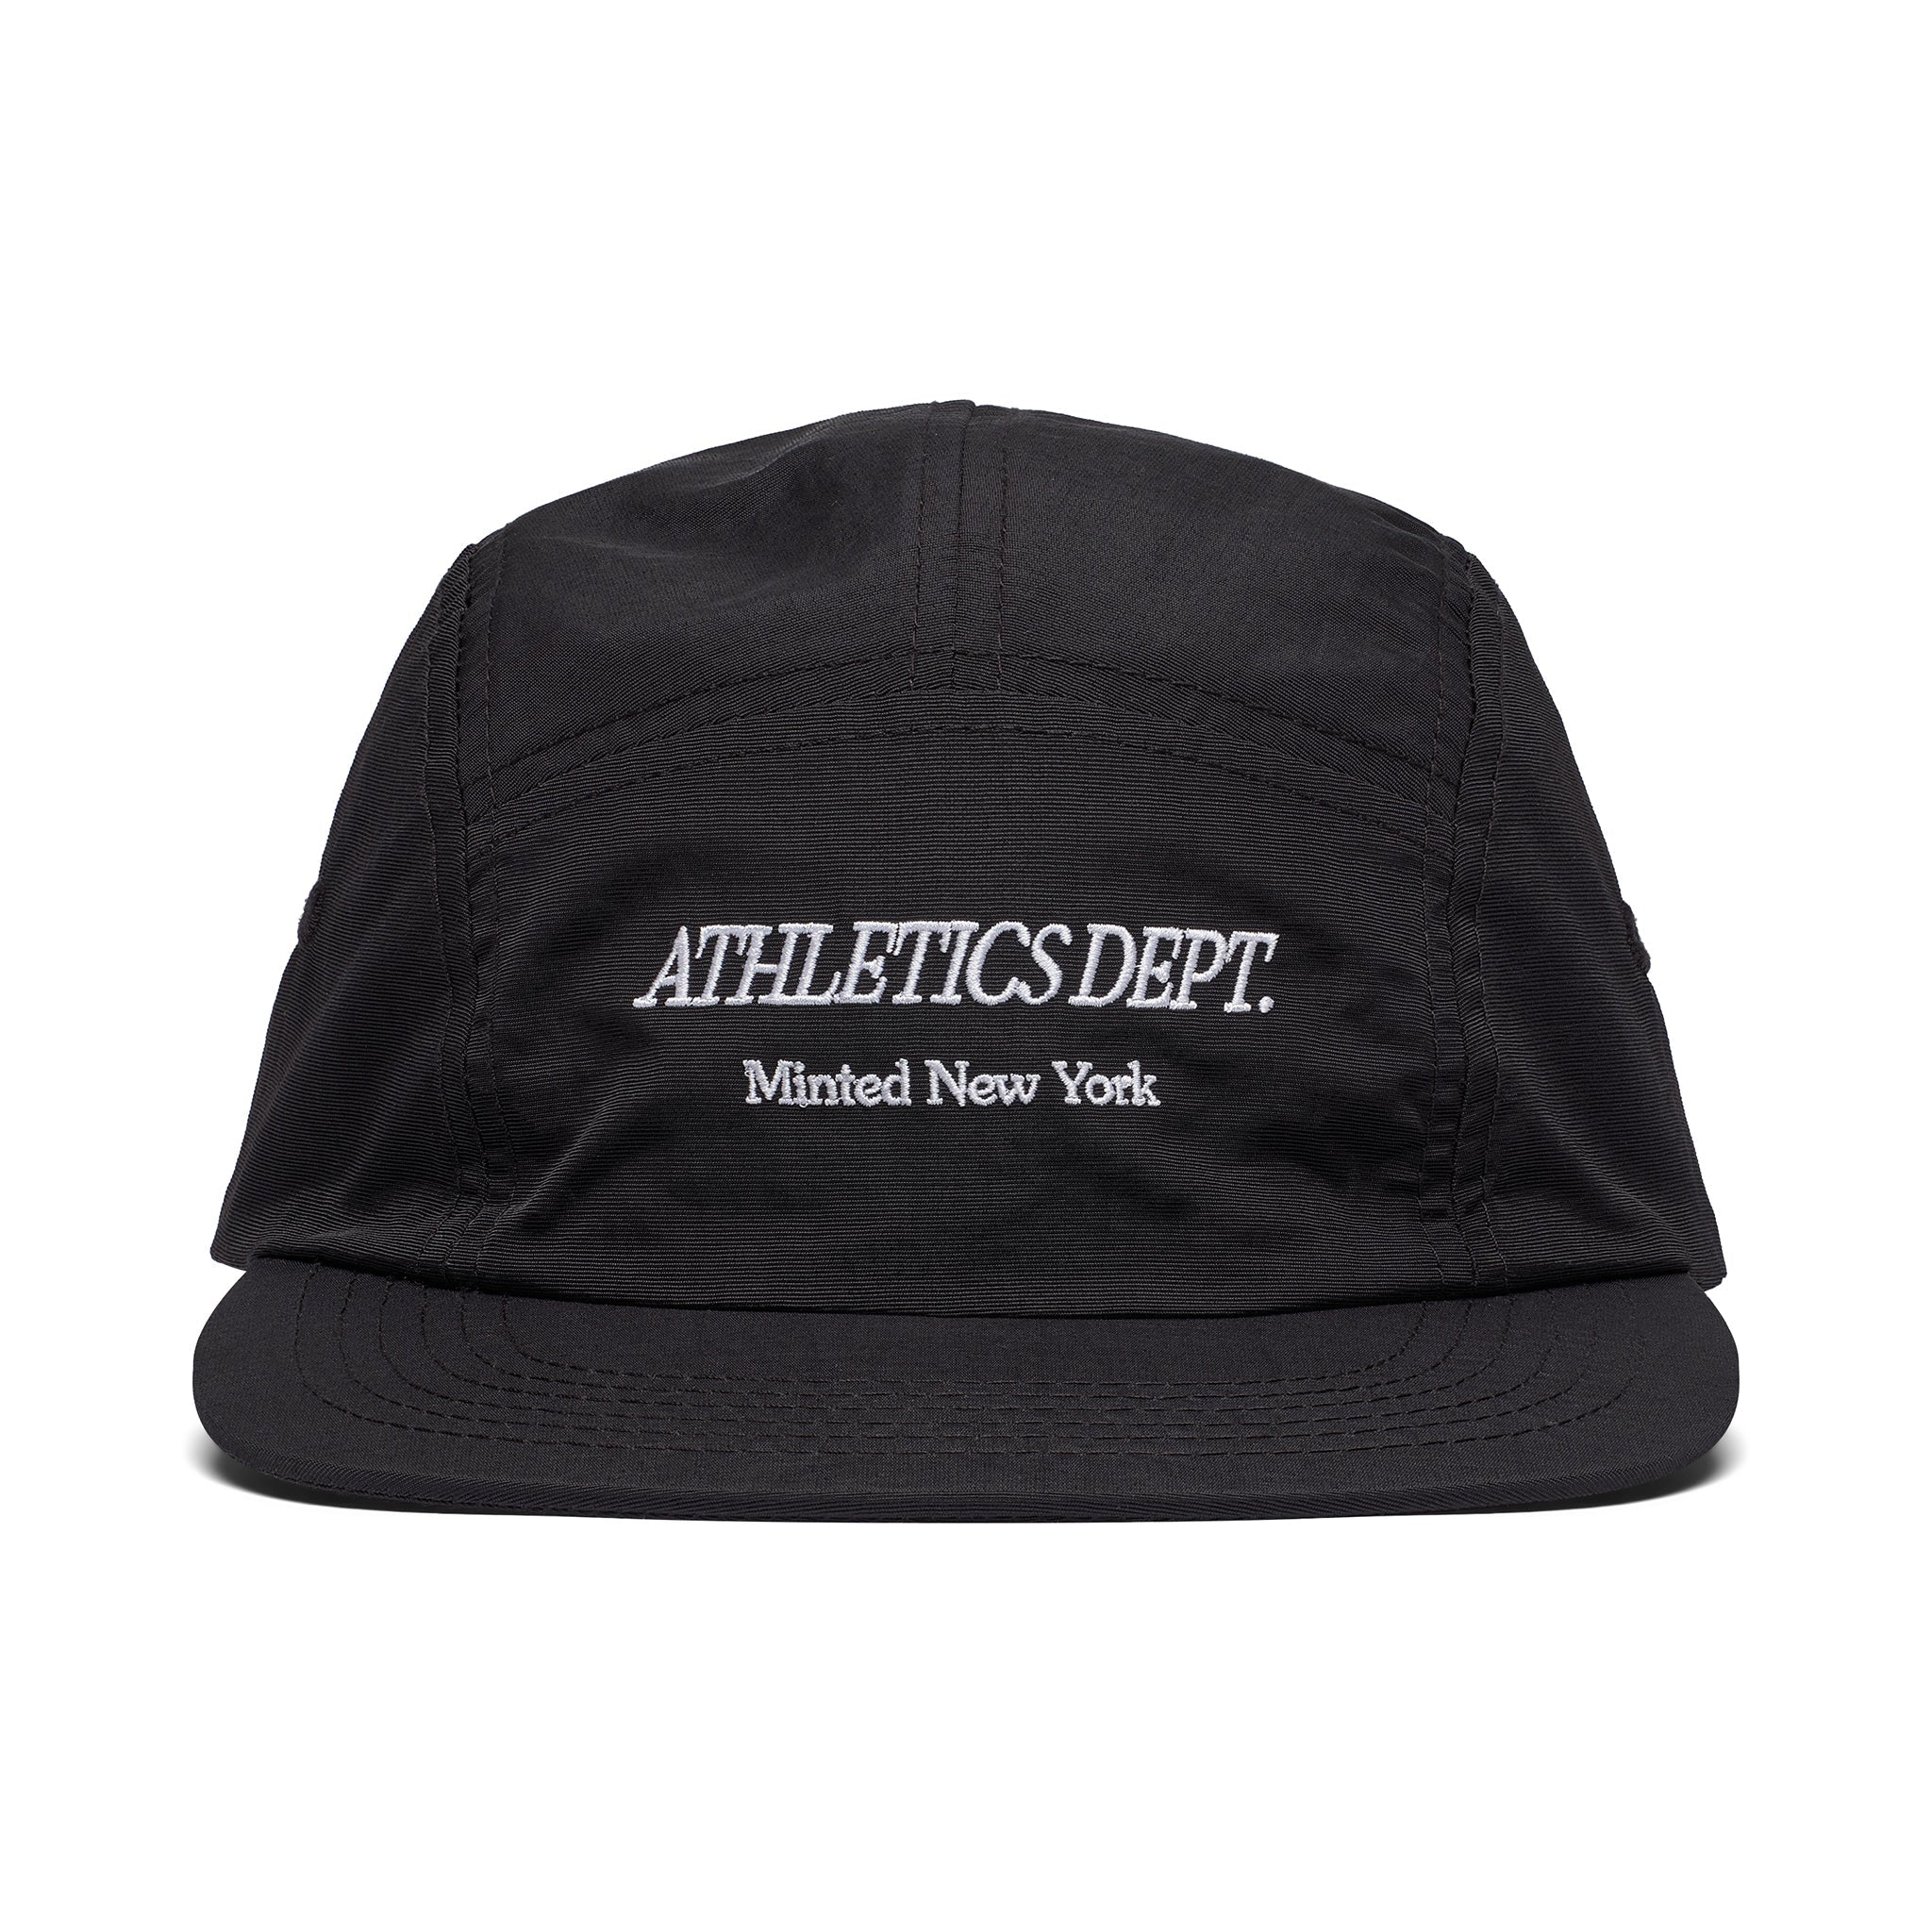 Athletics Dept. Running Hat - Minted New York